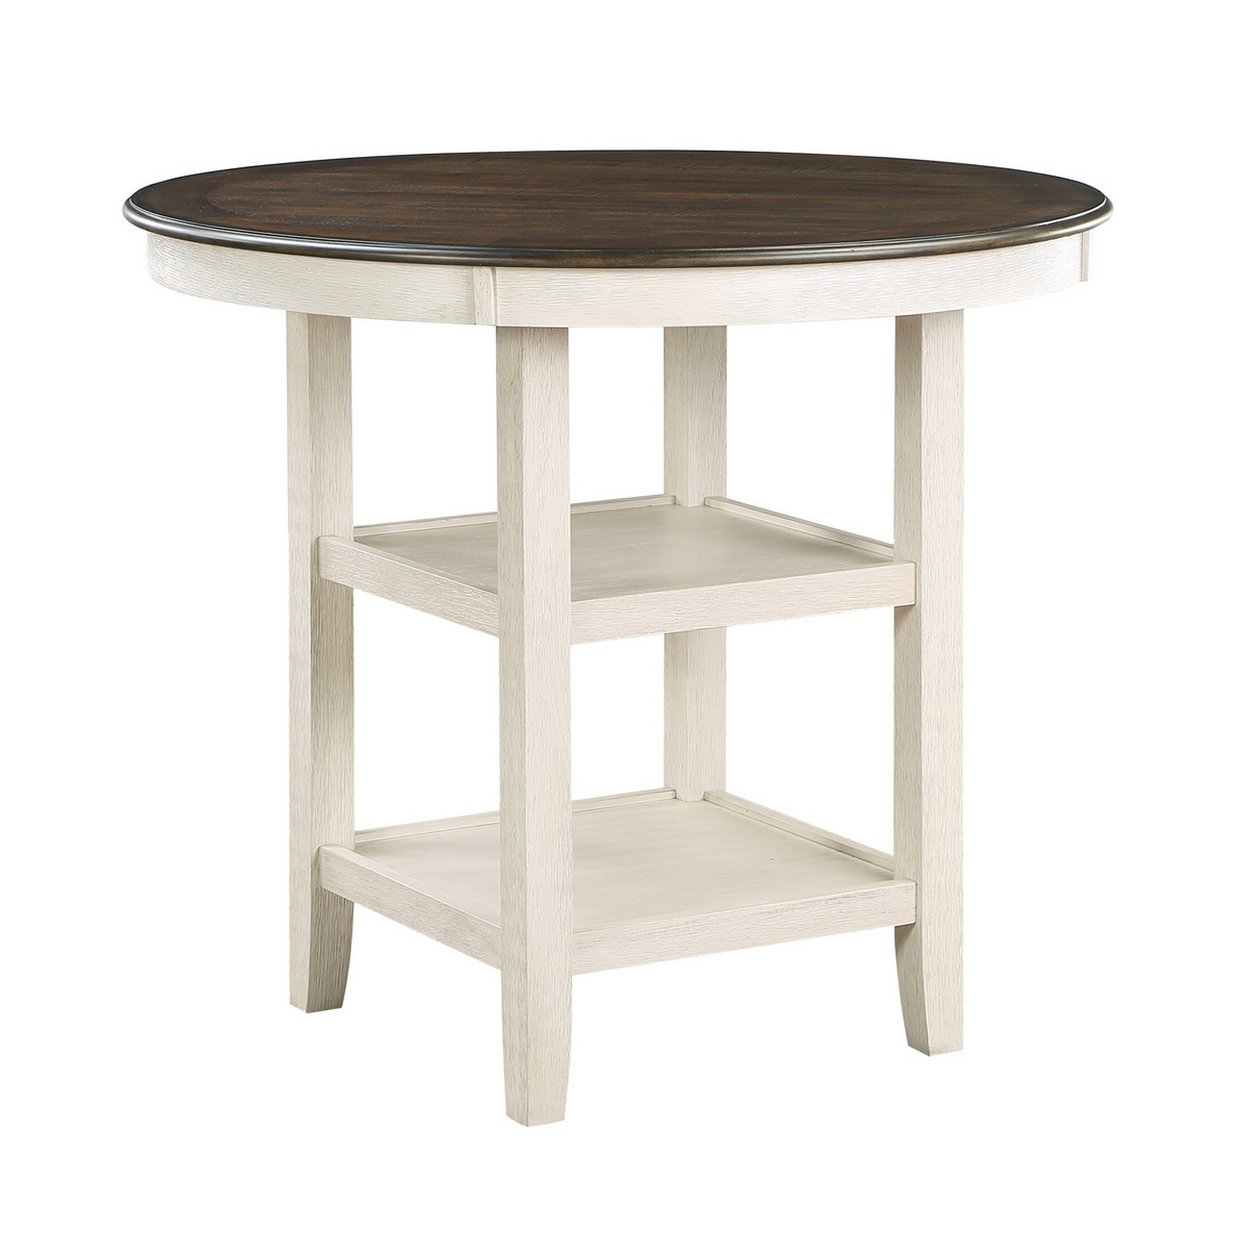 Anji 42 Inch Counter Table, Round Surface, 2 Open Shelves, Brown, White- Saltoro Sherpi